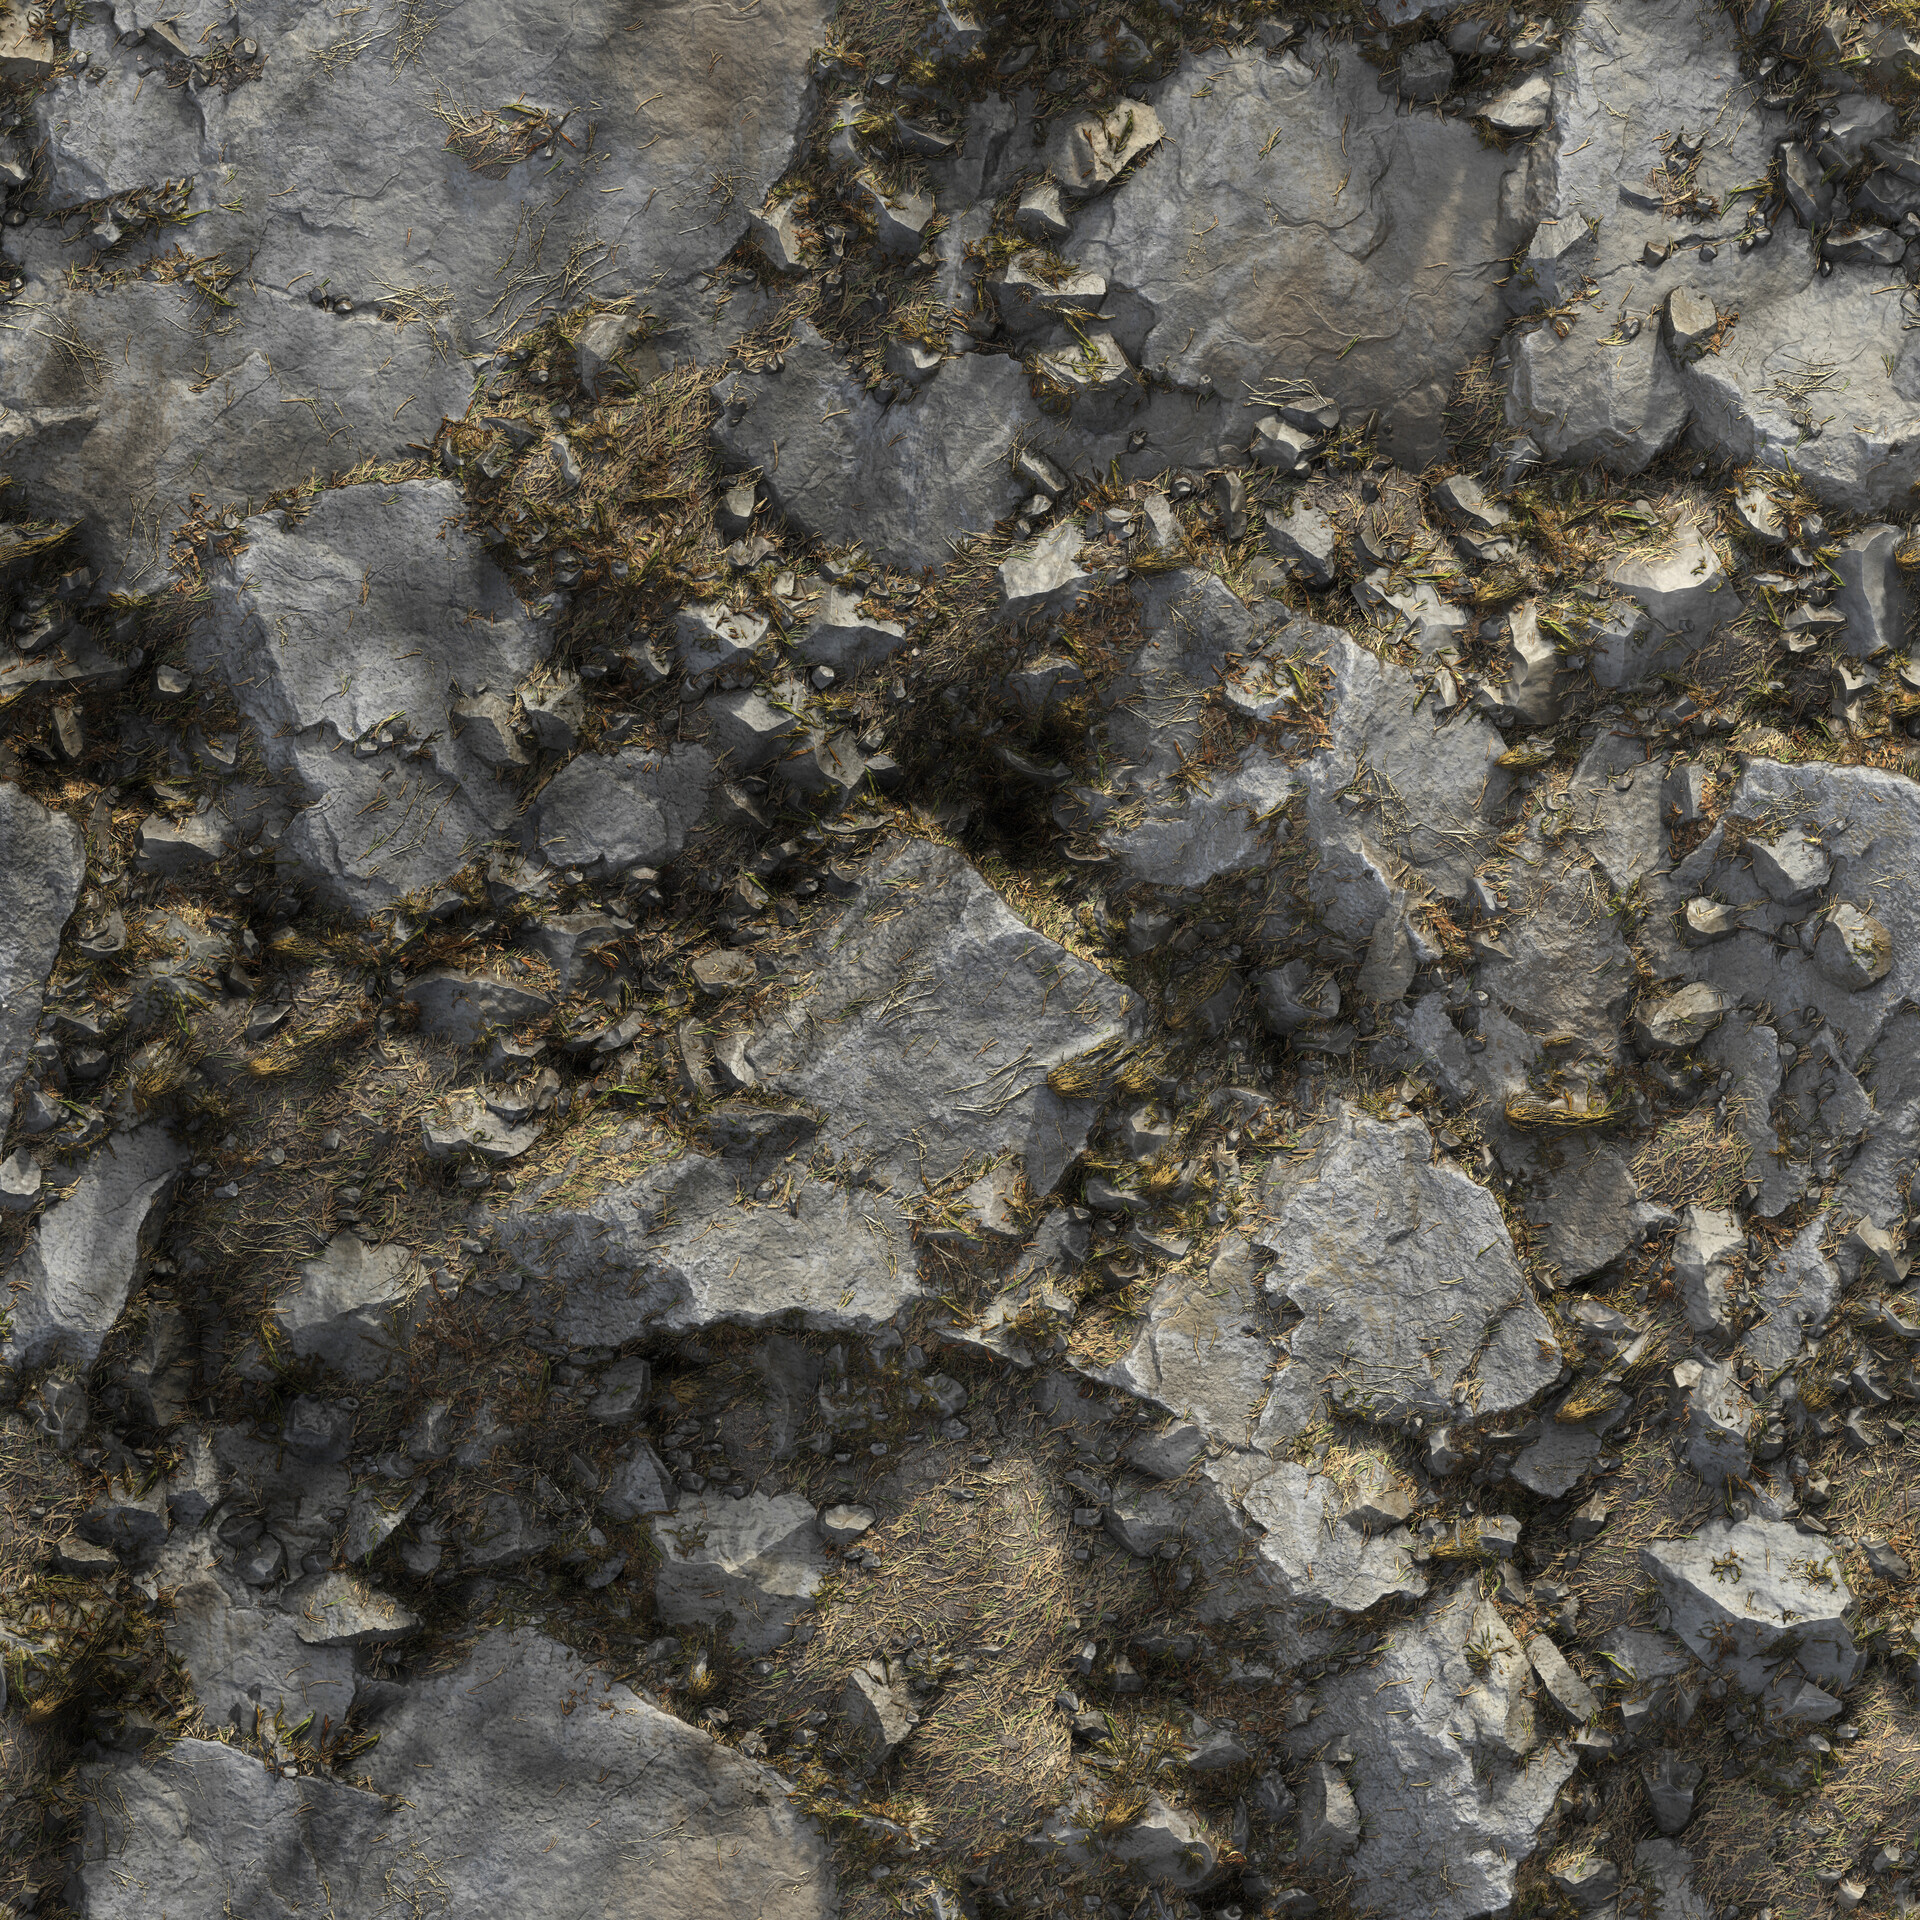 PBR Wetland Rocky Gravel Material Study